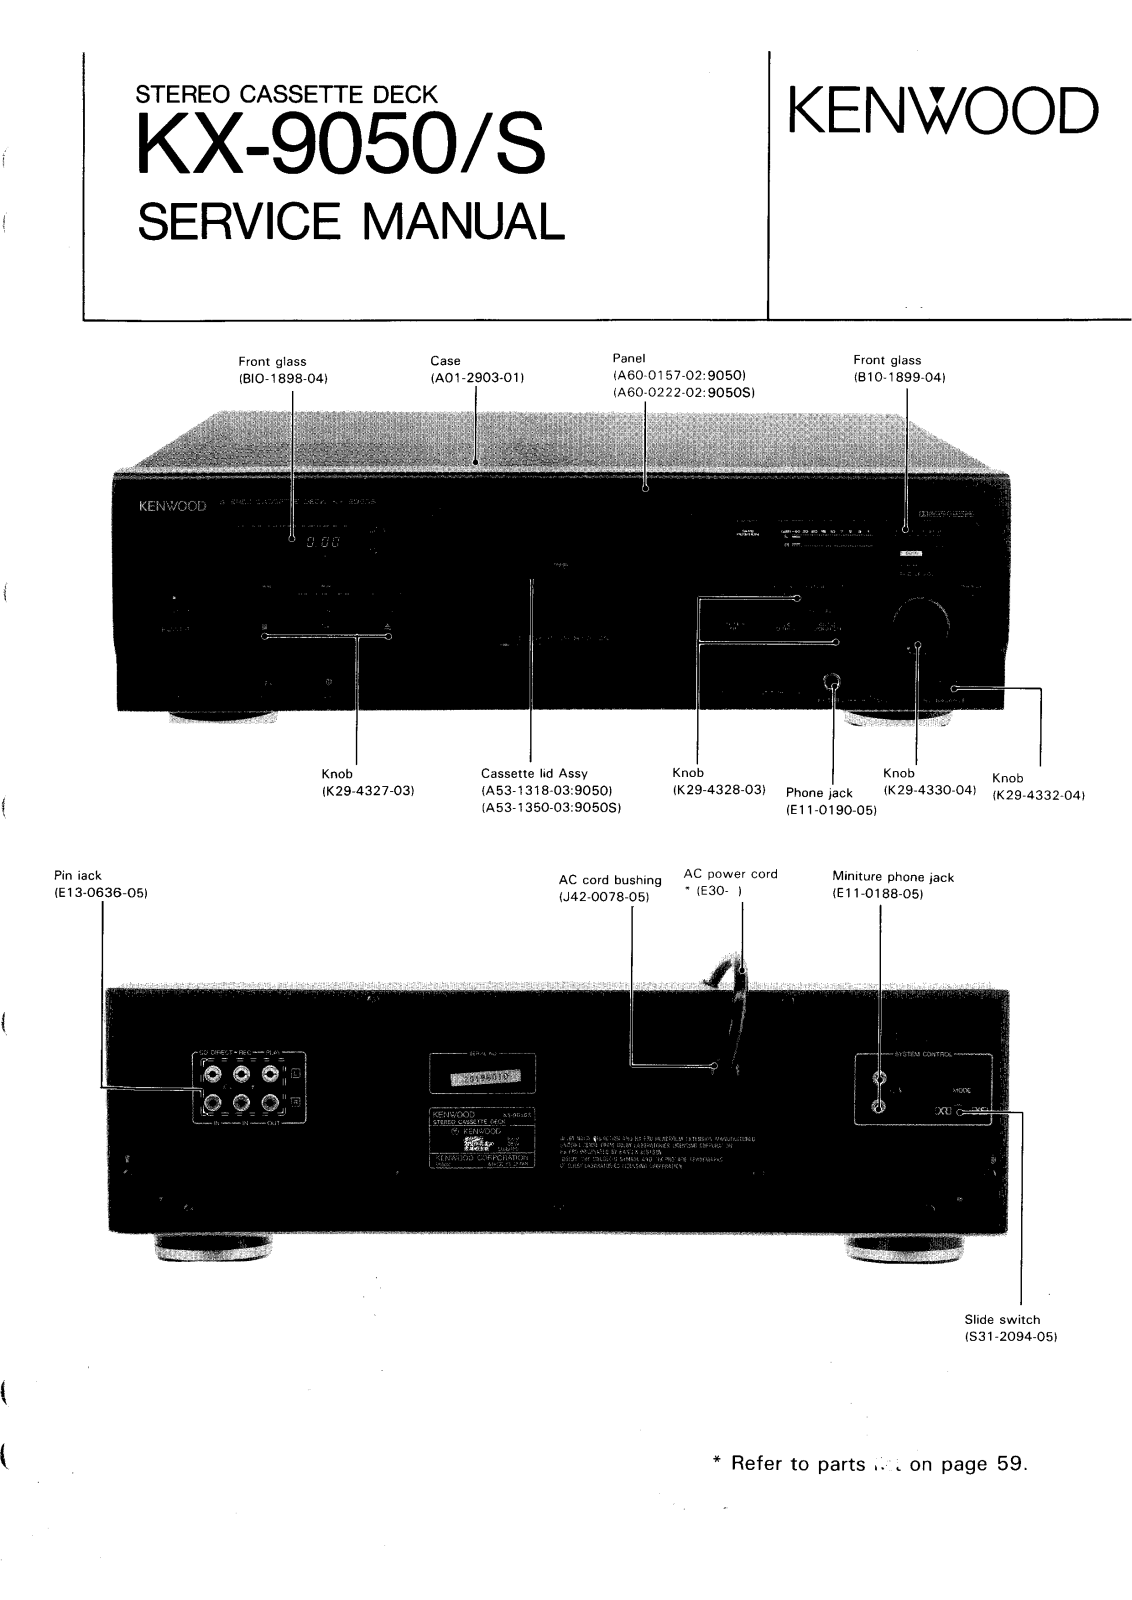 Kenwood KX-9050-S Service Manual